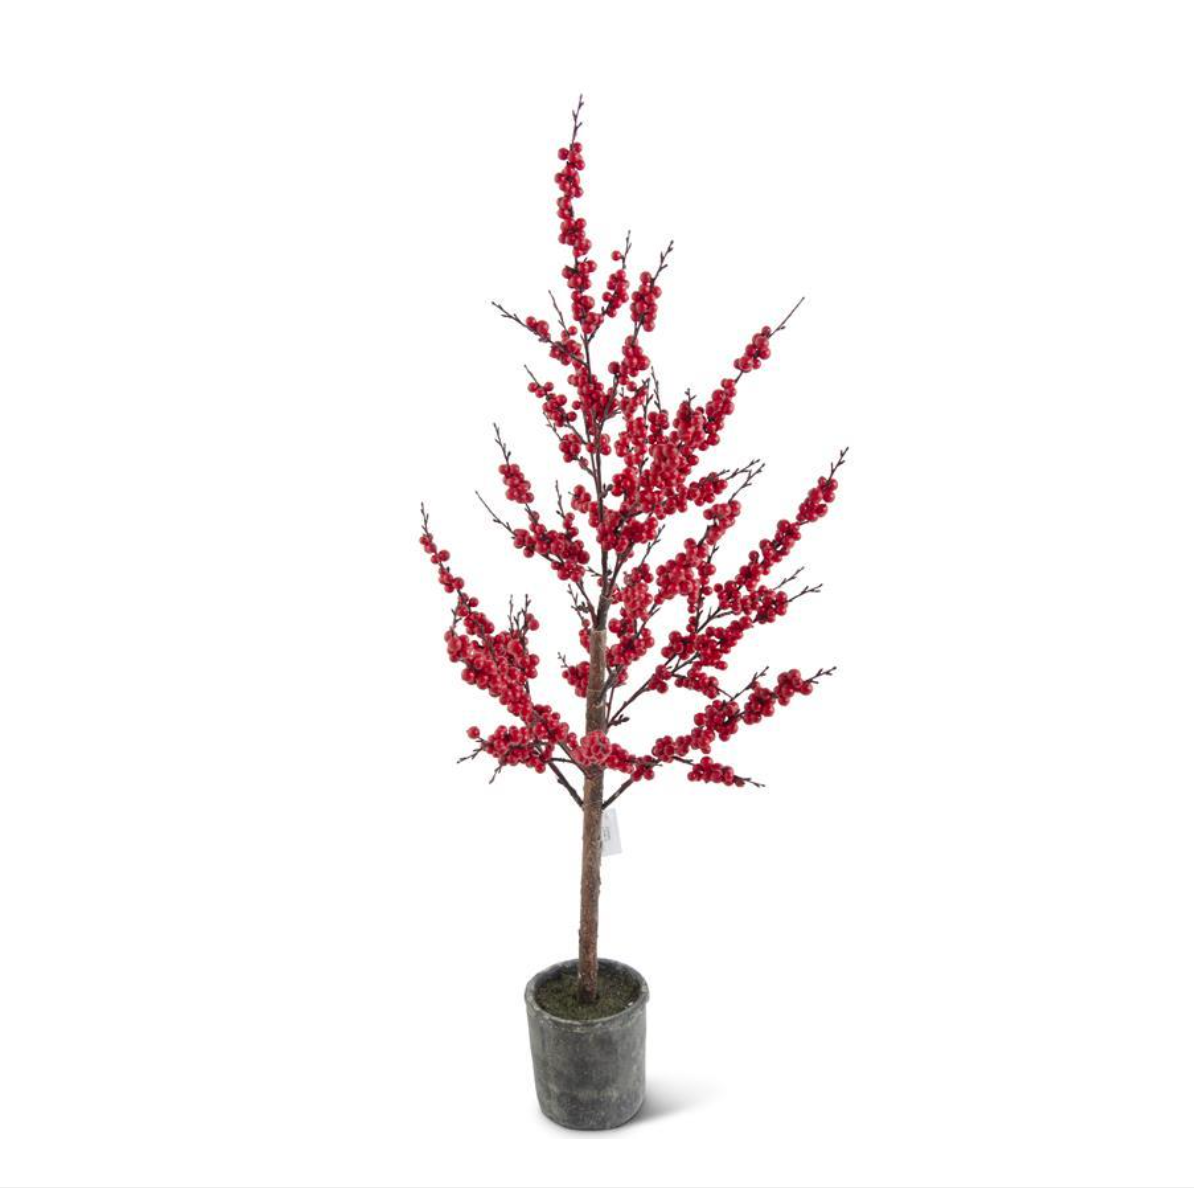 5.5 Foot Red Berry Tree in Pot - K&K INTERIORS - Compralo en CorinneRegalos.com